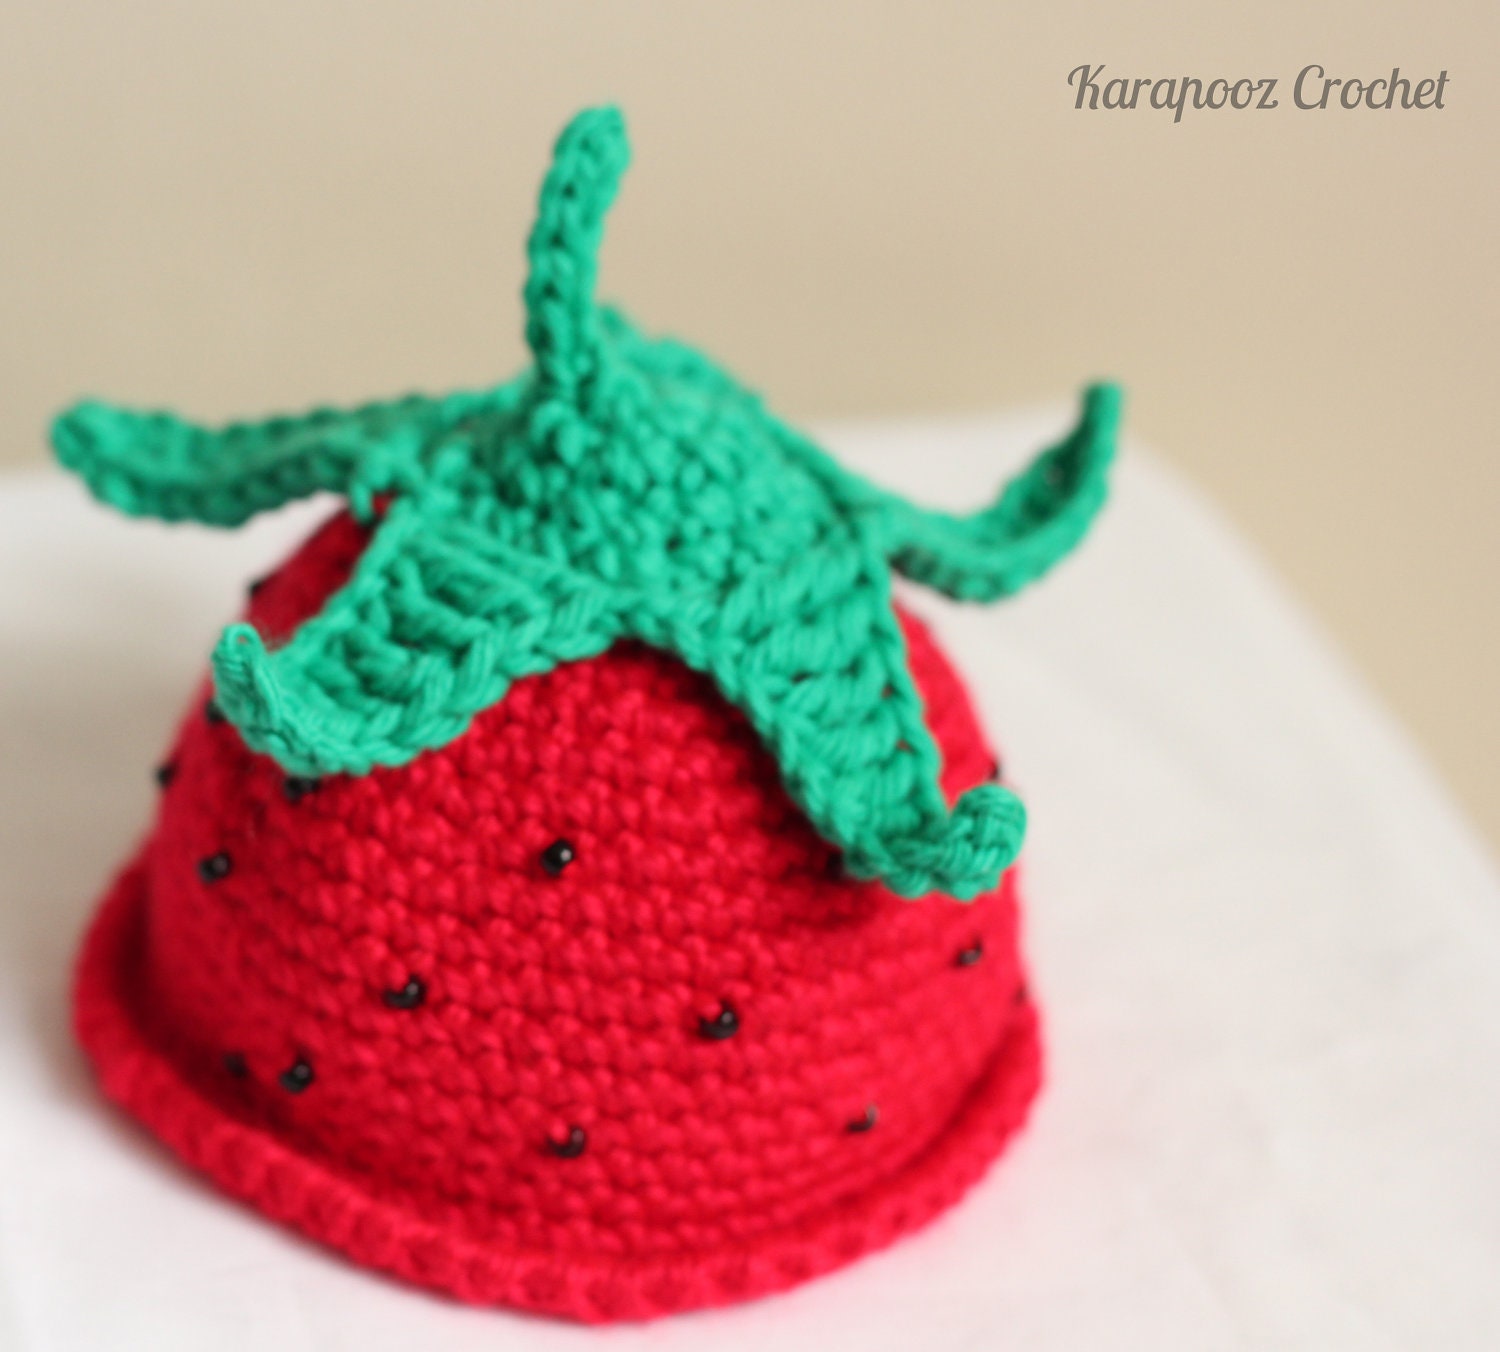 crochet strawberry hat